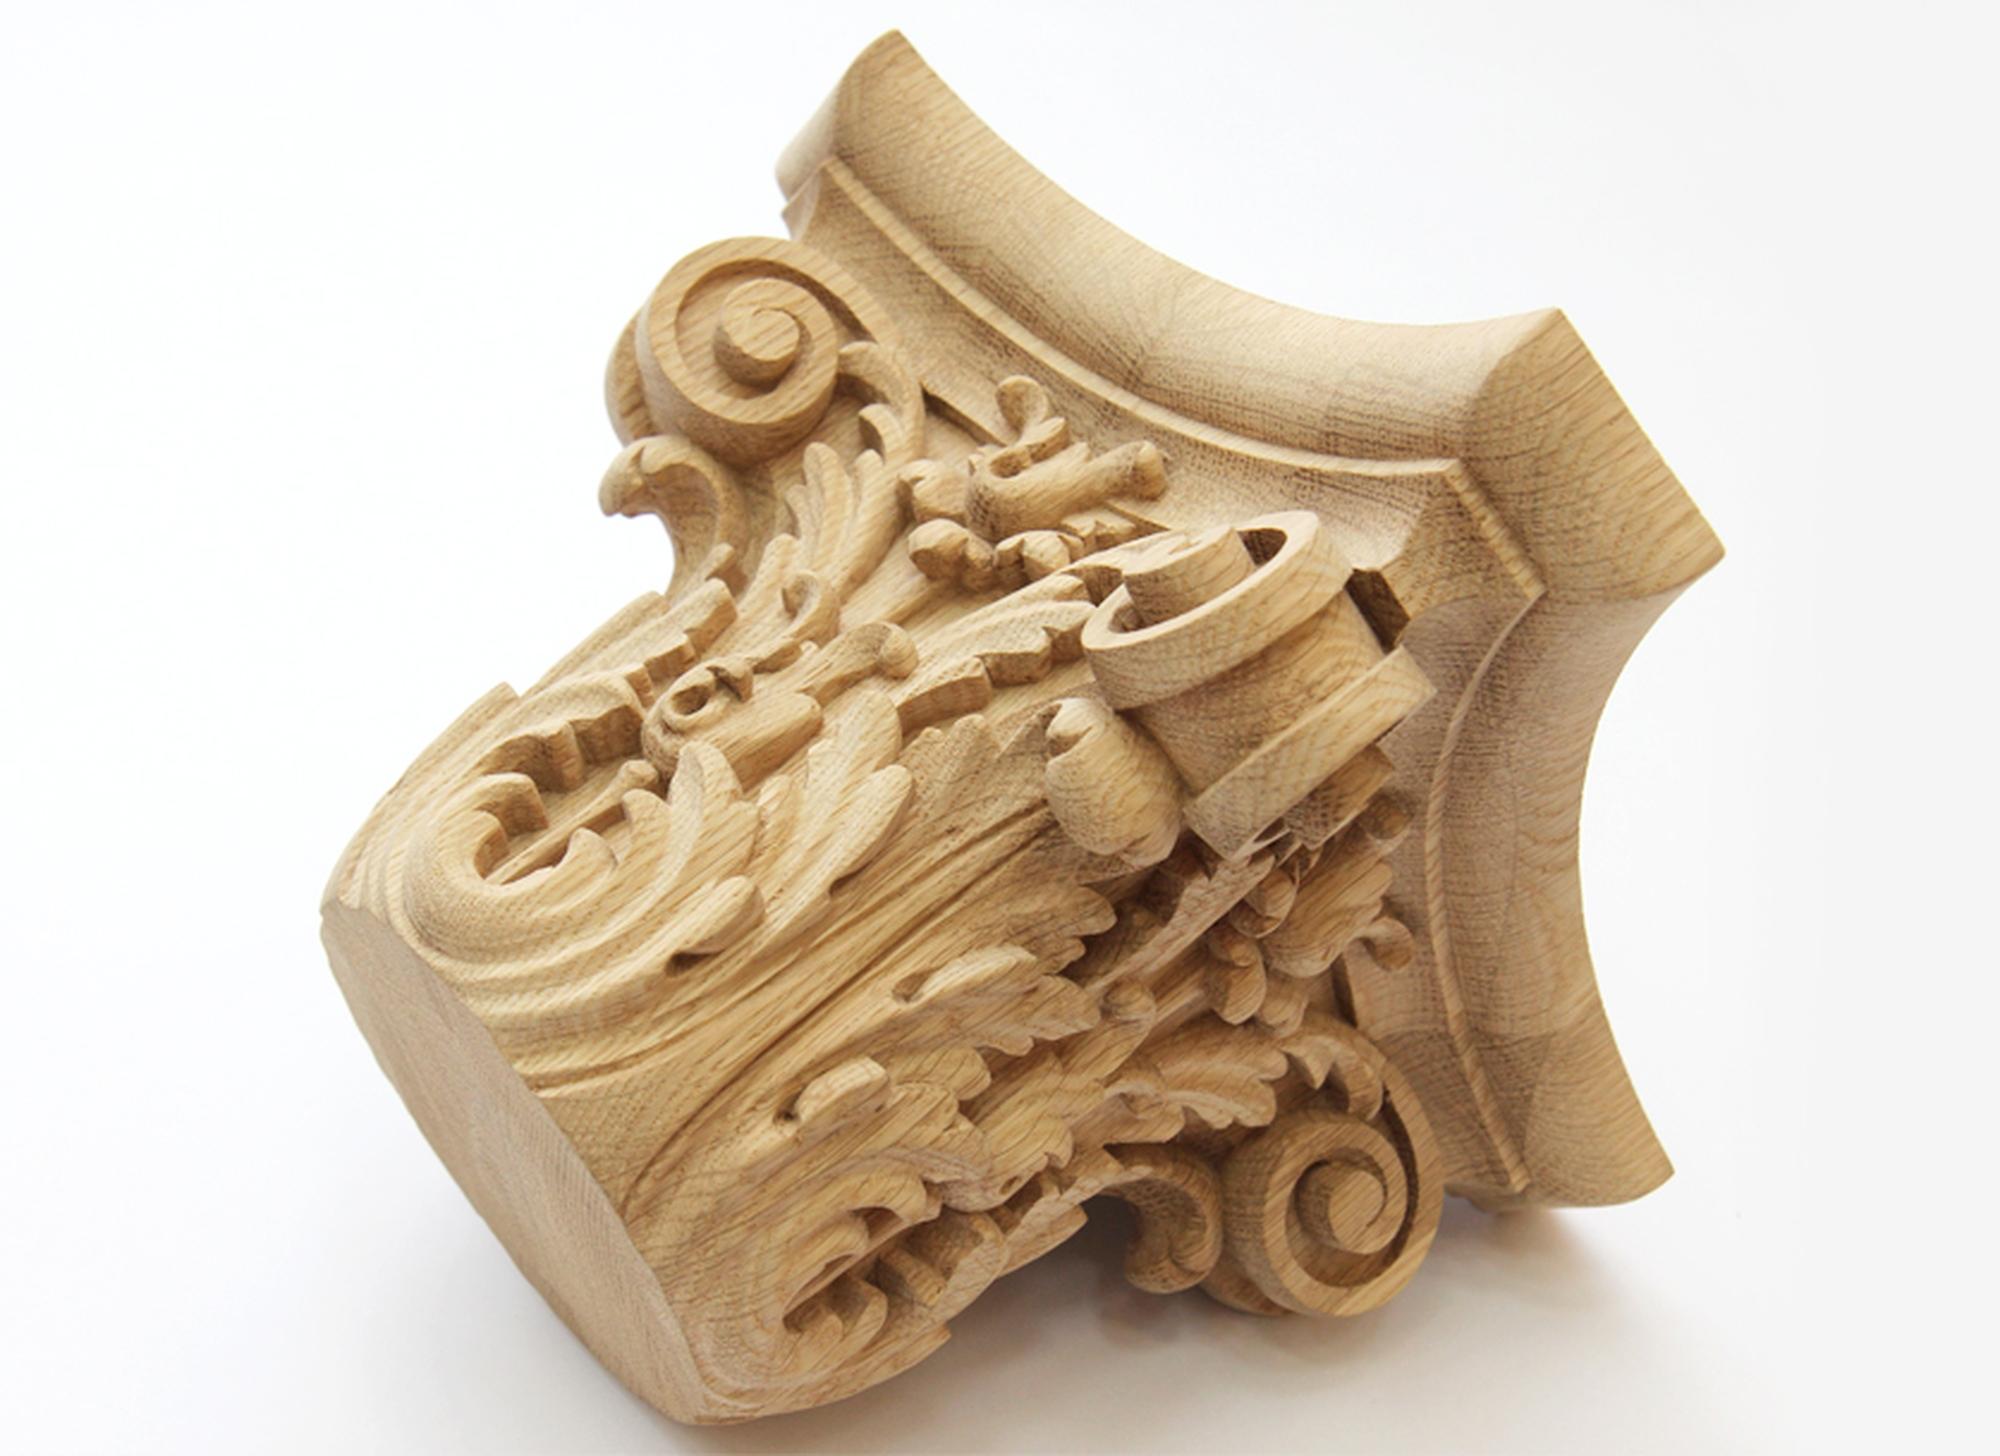 High quality Decorative carve wood capital. Support for columns, pillars. Unpainted.

>> SKU: KL-024

>> Dimensions (A x B x C x f): 

1) 4.09